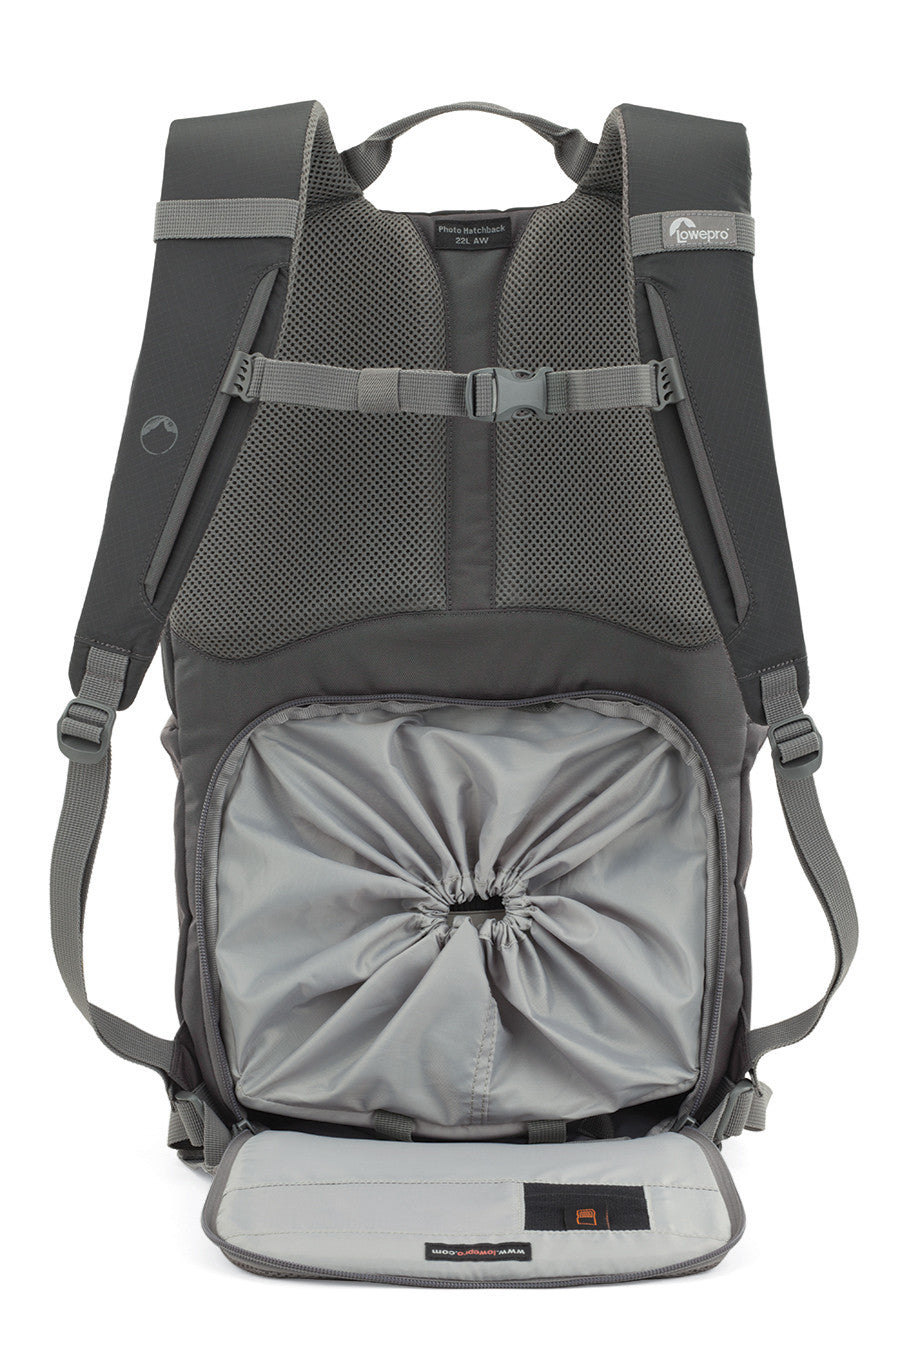 Lowepro Photo Hatchback 22L AW Camera Backpack (Slate Grey), discontinued, Lowepro - Pictureline  - 5